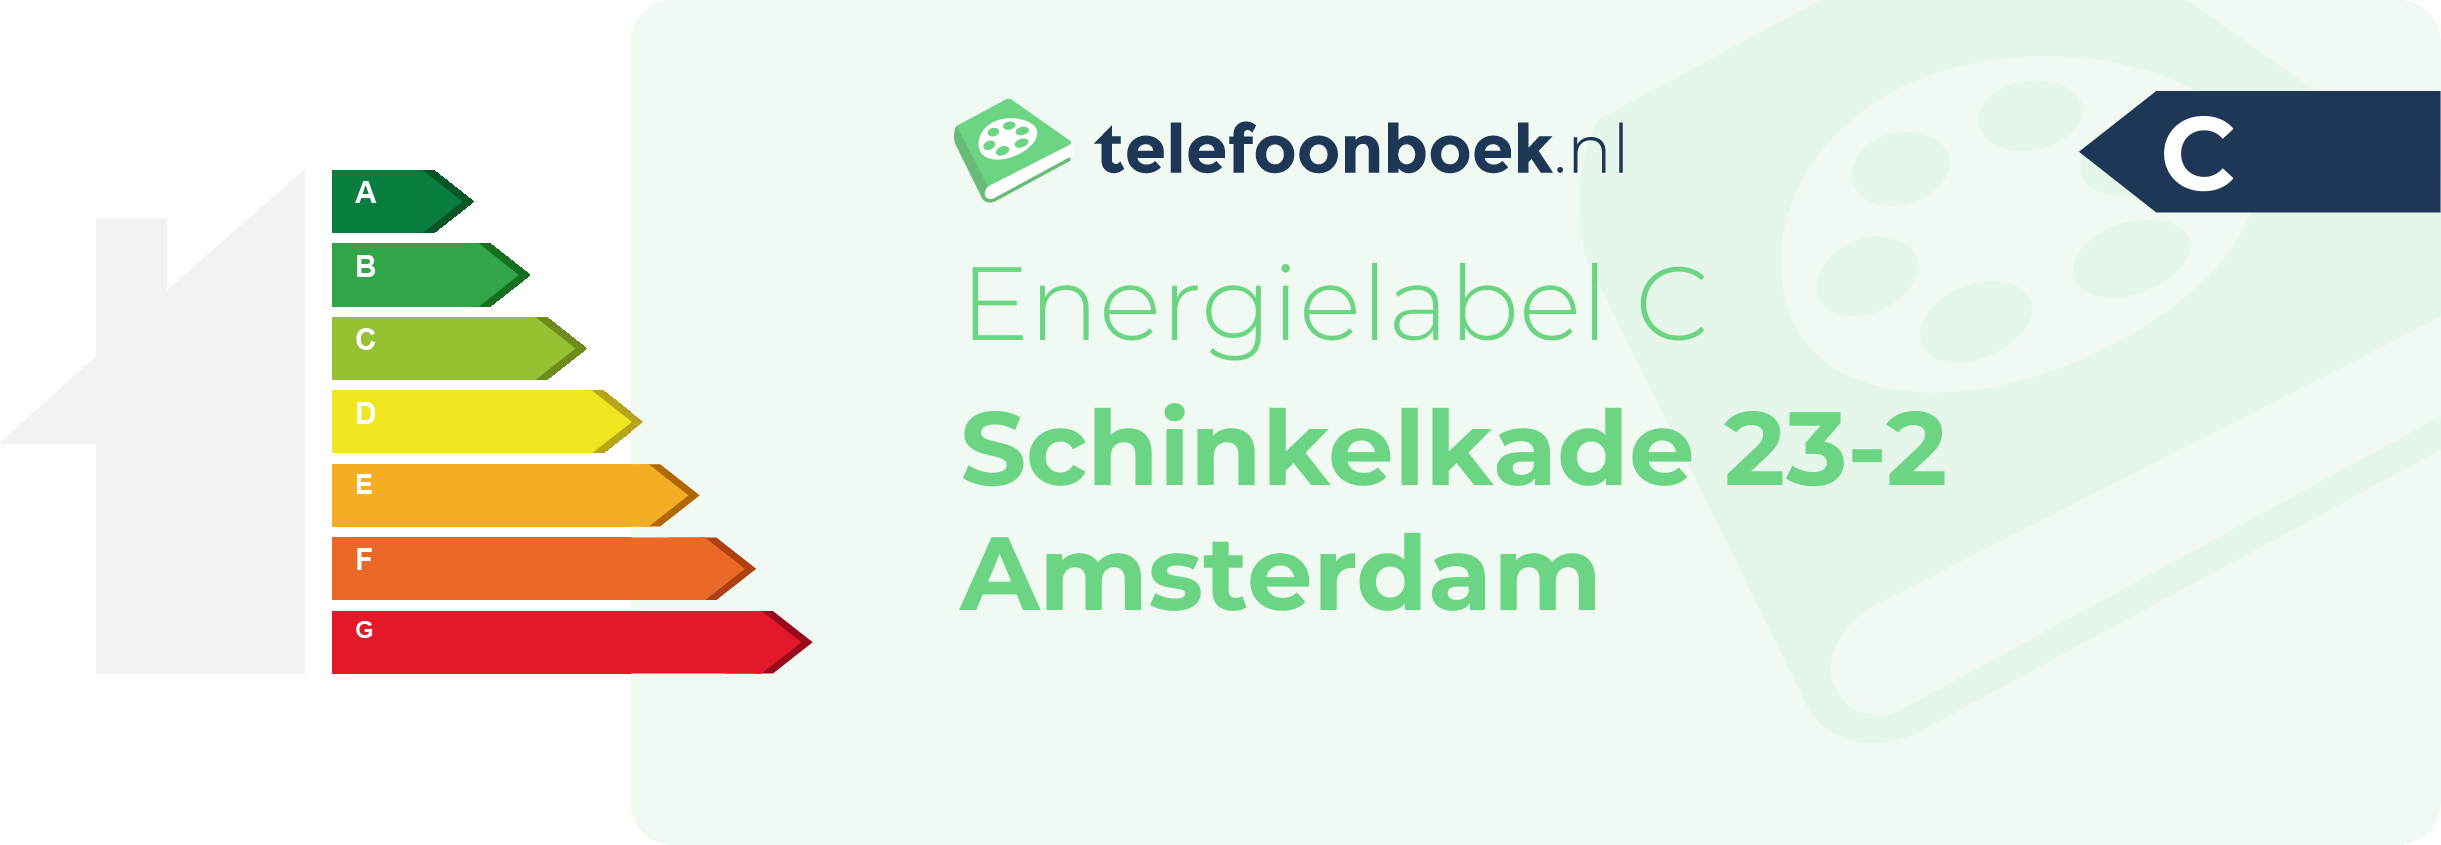 Energielabel Schinkelkade 23-2 Amsterdam